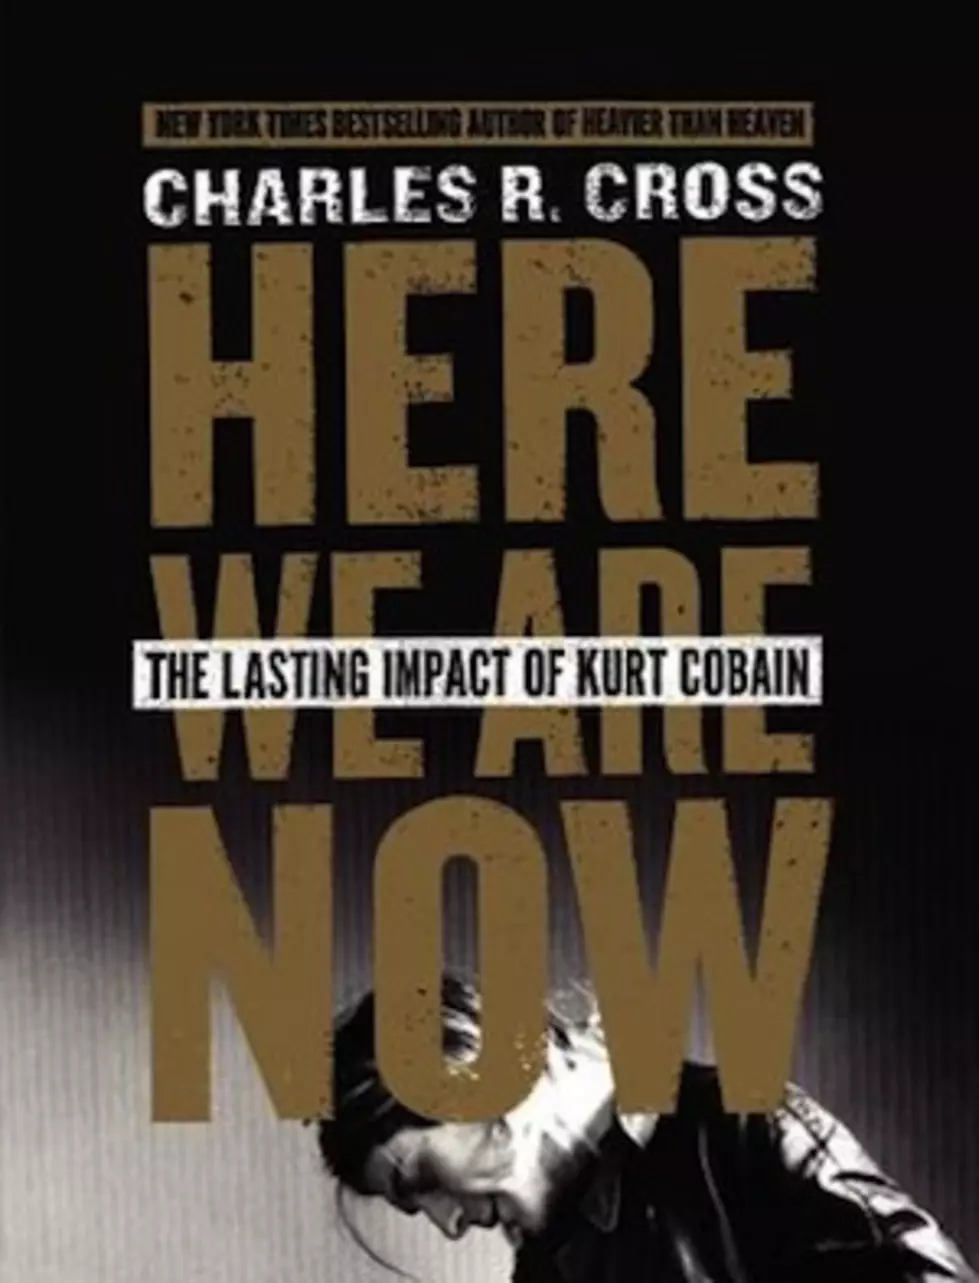 Kurt Cobain&#8217;s Impact On Society Explored In New Charles R. Cross Book